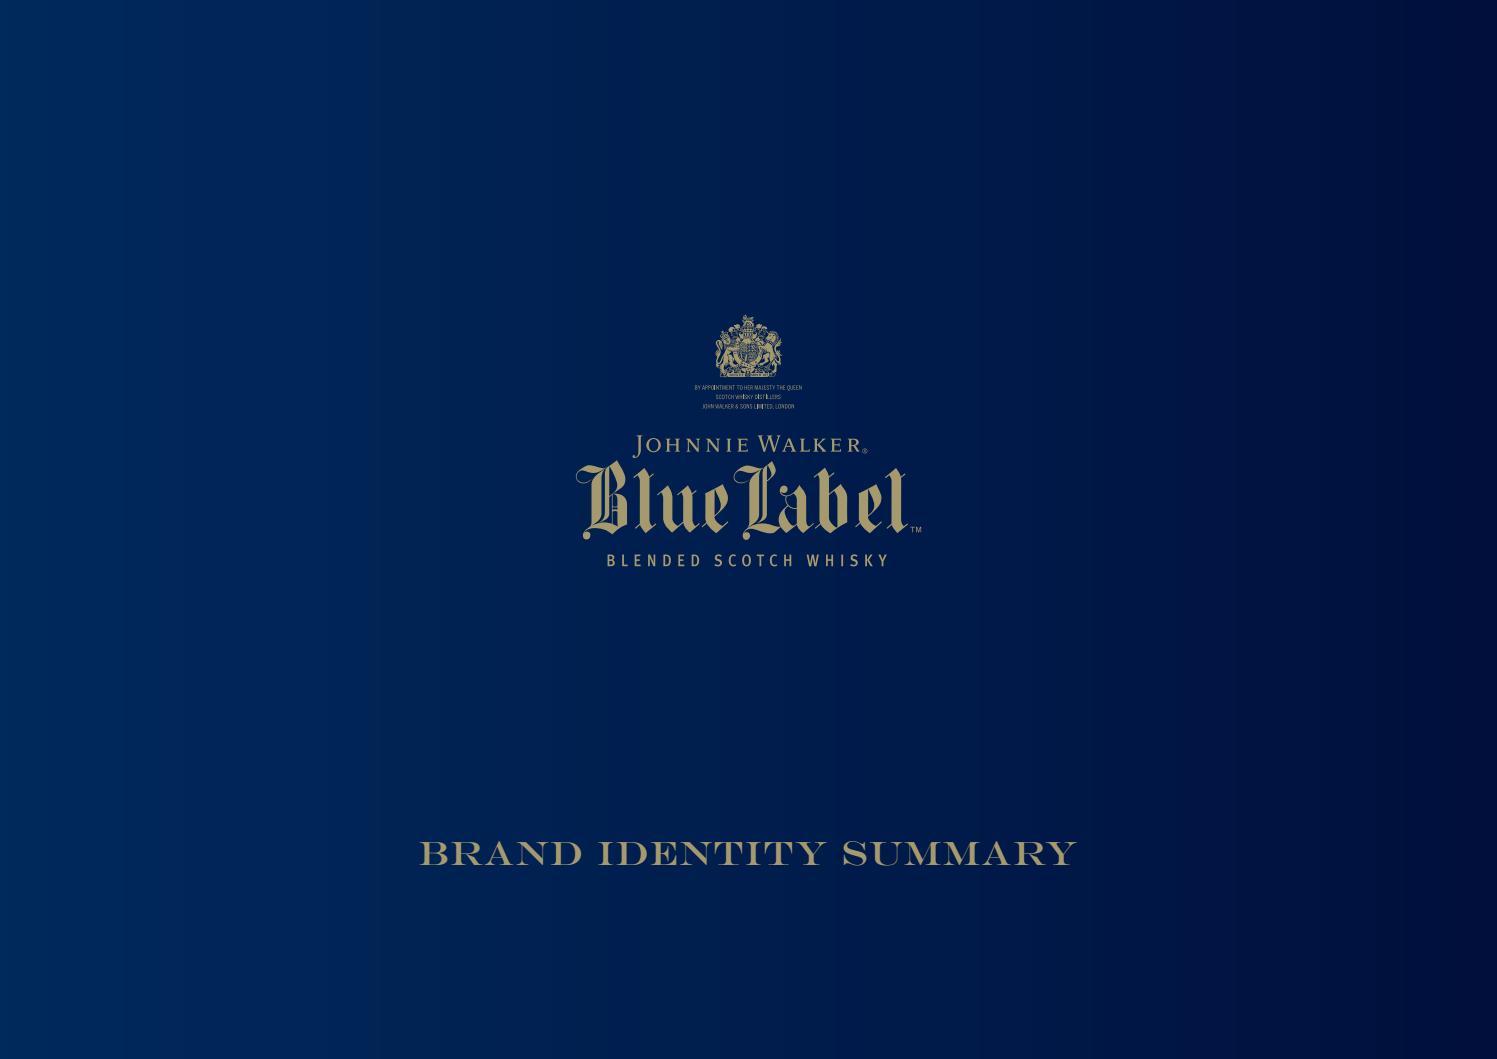 Johnnie Walker Logo - Johnnie Walker Blue Label Brand Identity Guidelines by LOGOBR - issuu